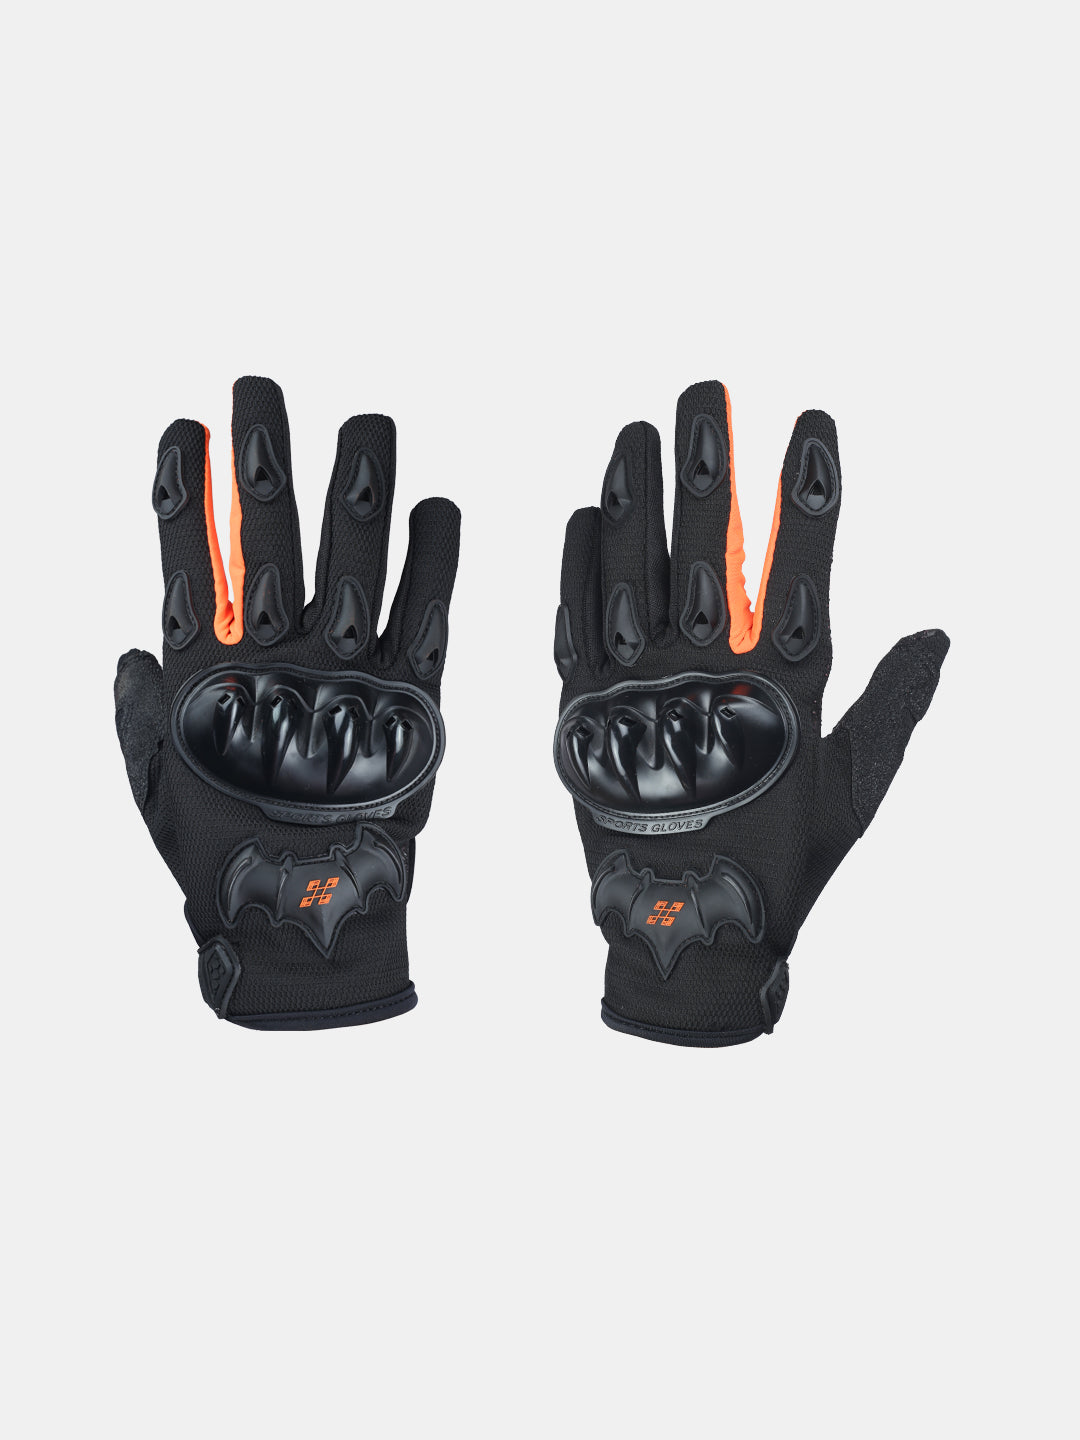 Masontex Gloves M33 Black Orange